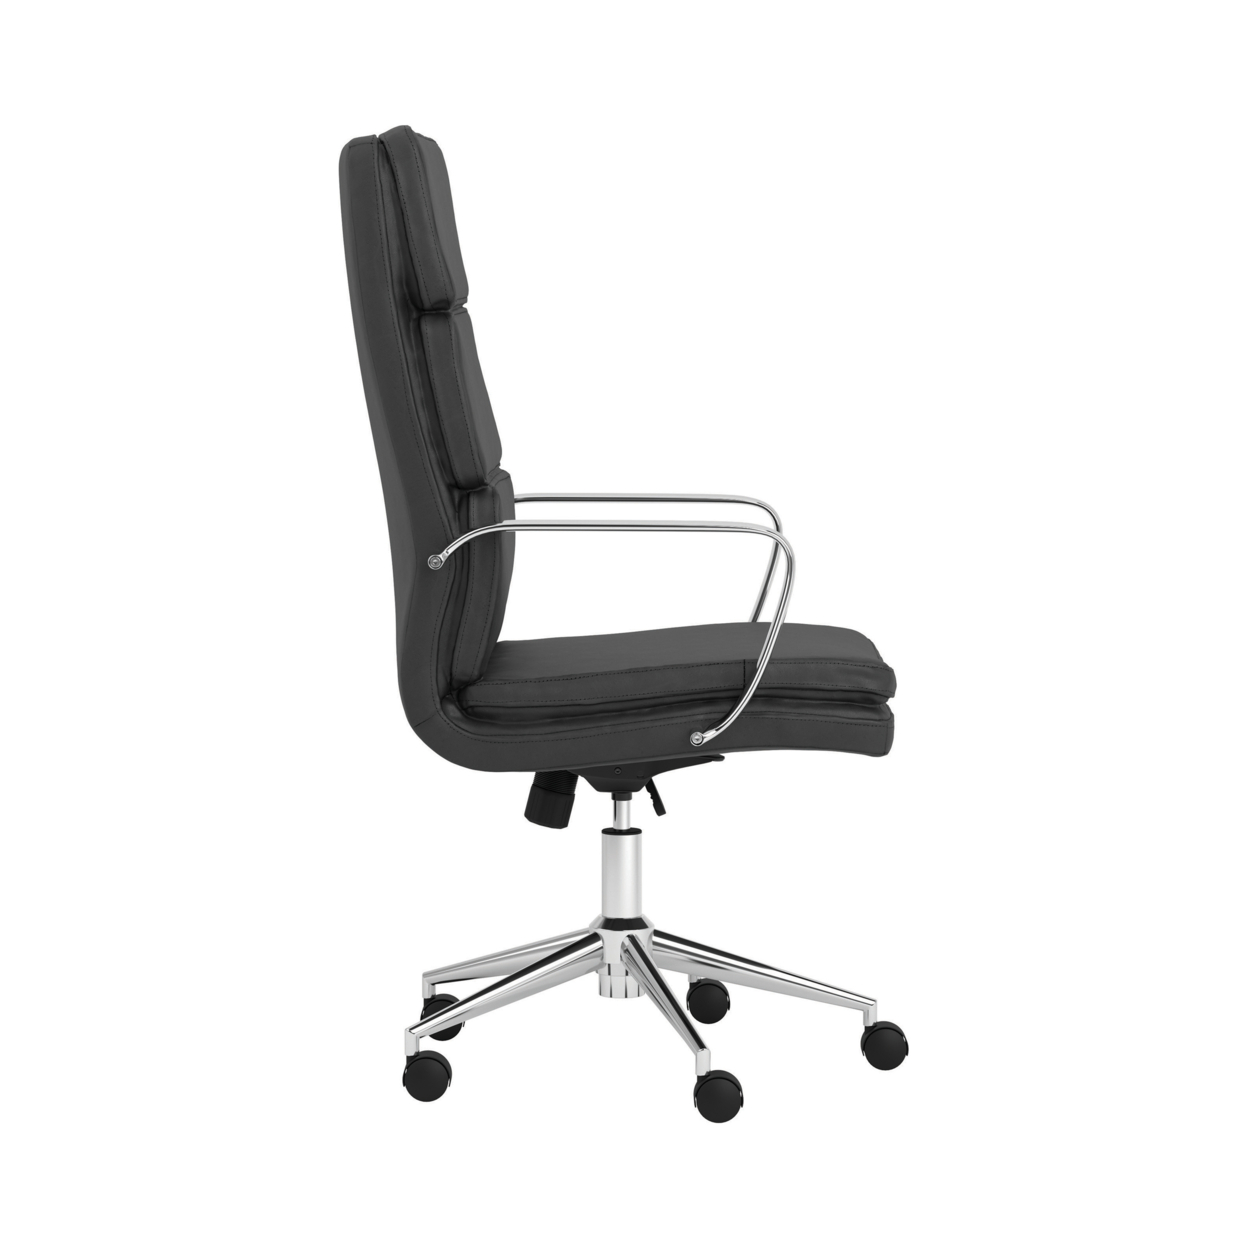 Horizontal Stitched Adjustable Leatherette Office Chair, Black And Chrome- Saltoro Sherpi